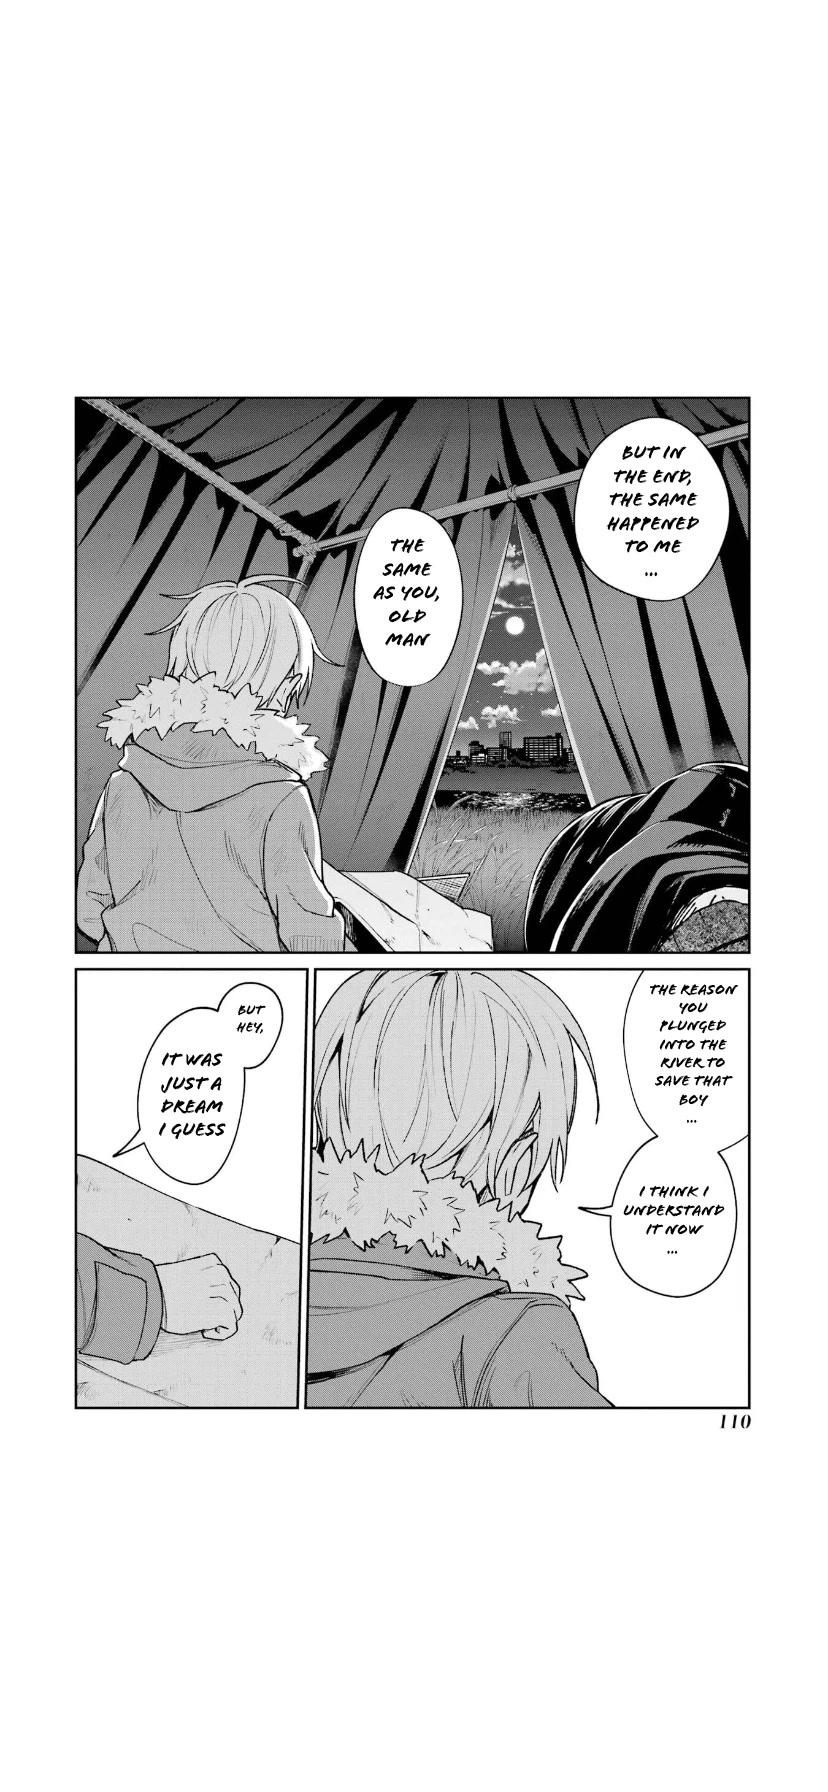 Read Sachi-Iro No One Room Chapter 66 - Manganelo